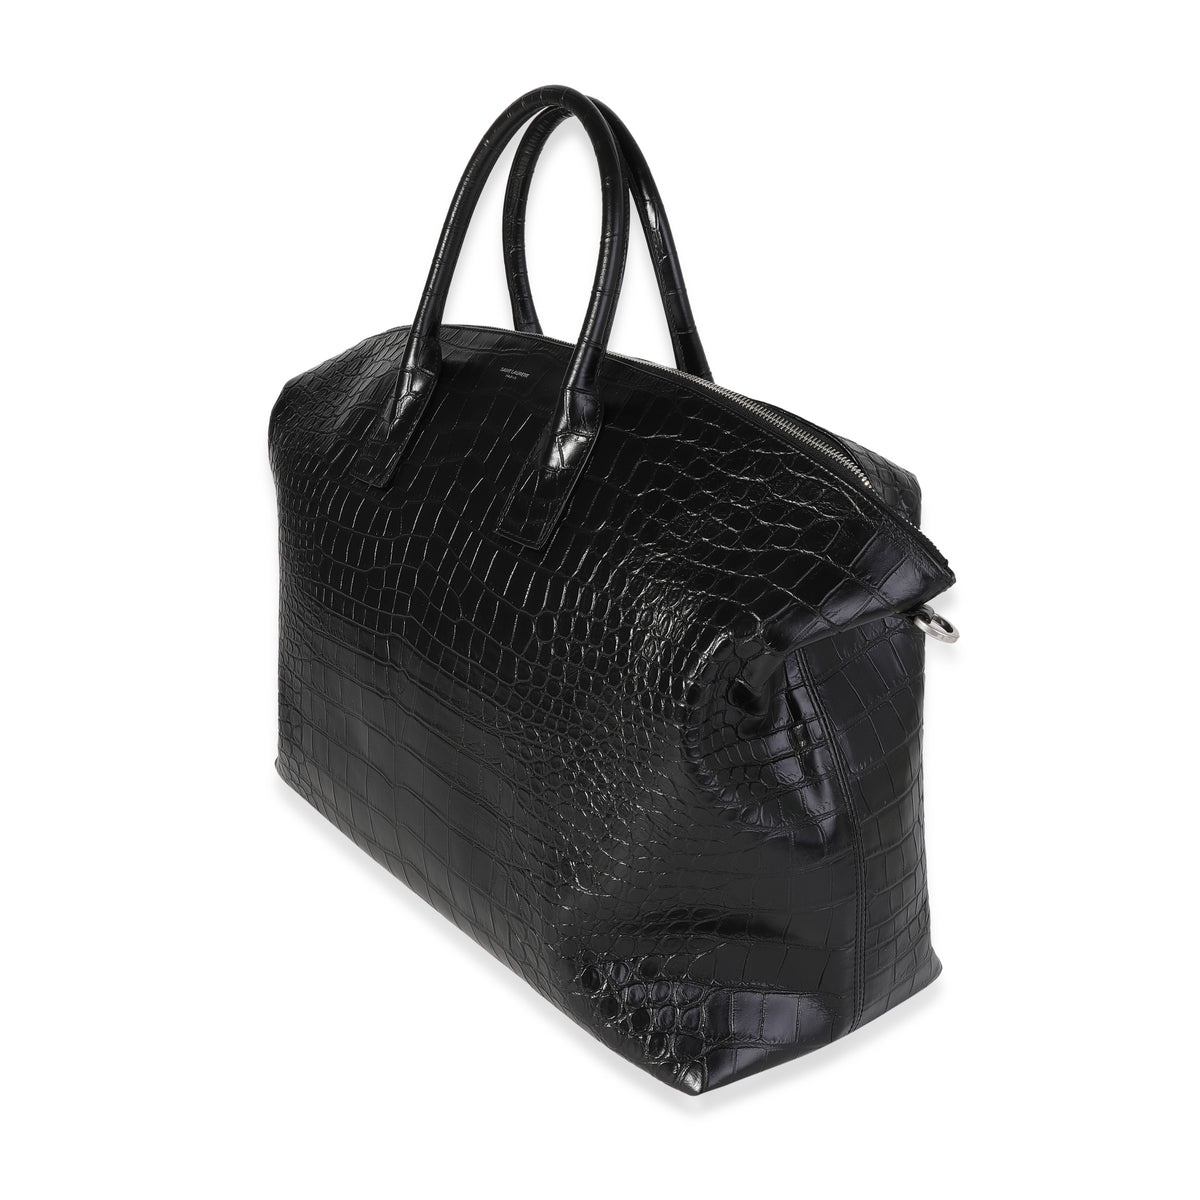 Saint Laurent Black Crocodile-Embossed Giant Bowling Bag